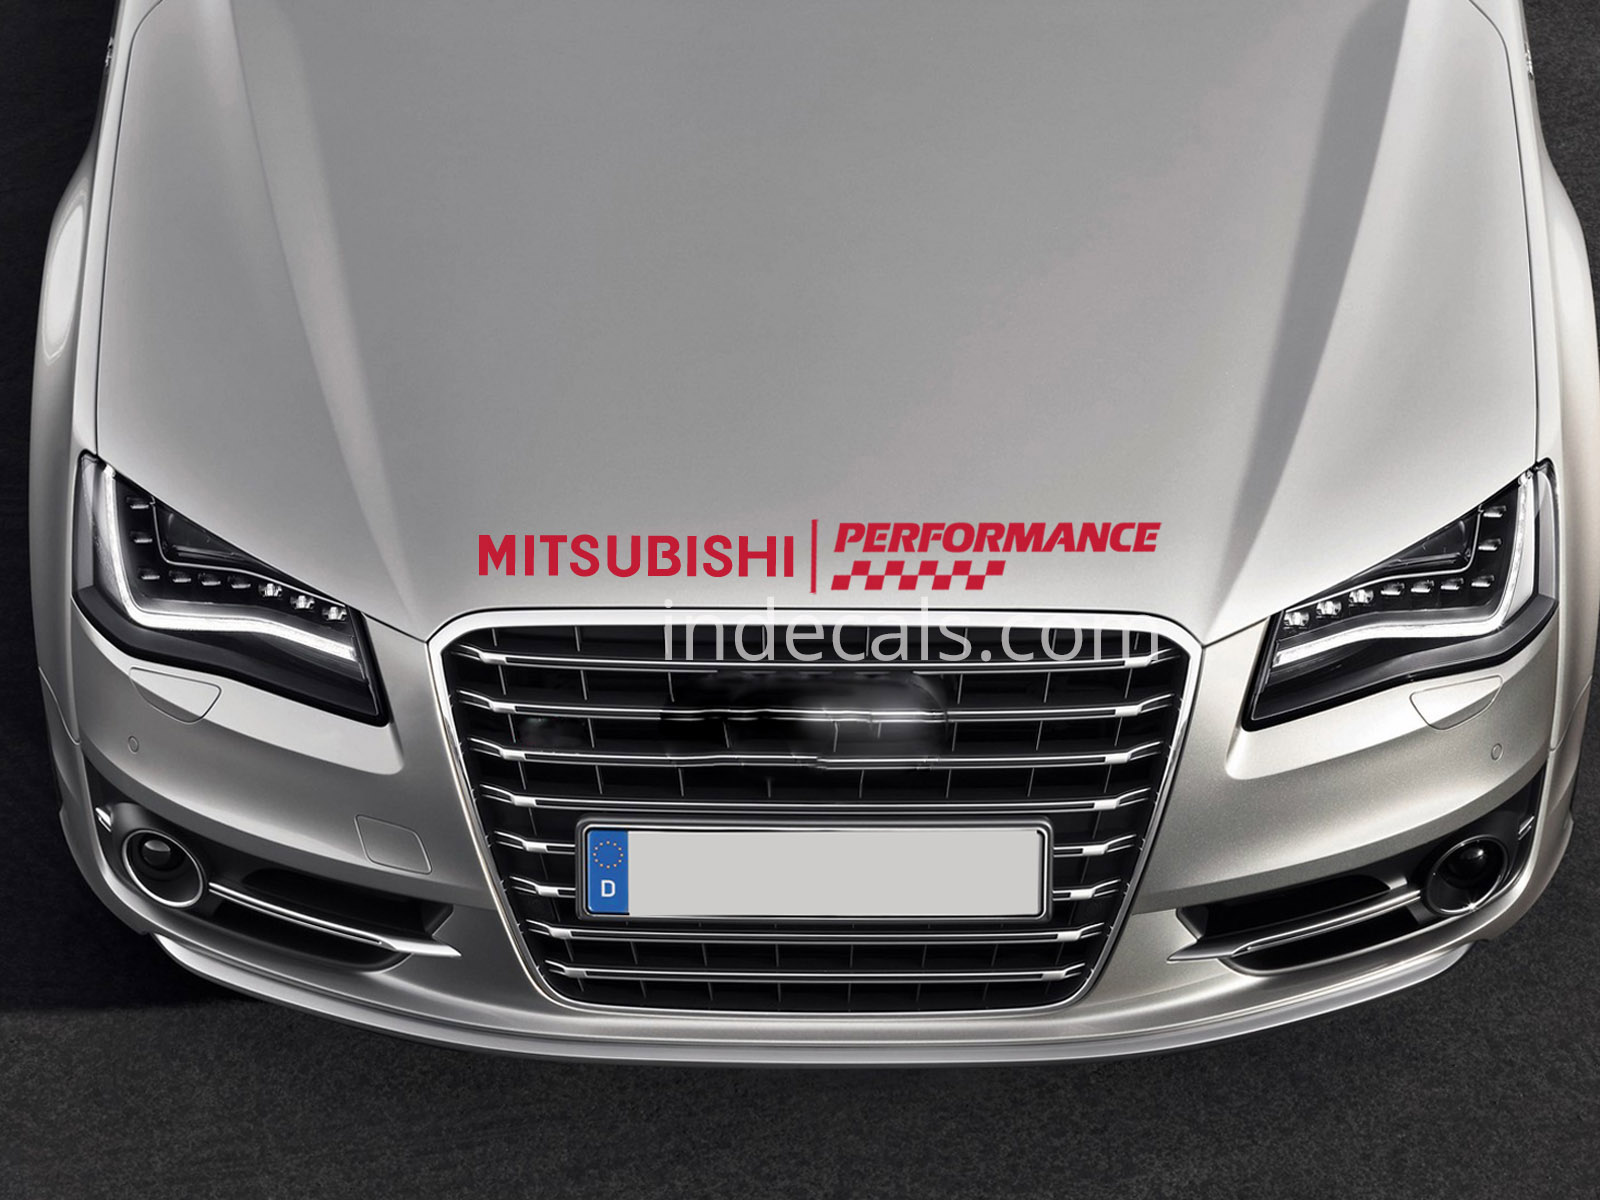 1 x Mitsubishi Performance Sticker for Bonnet - Red